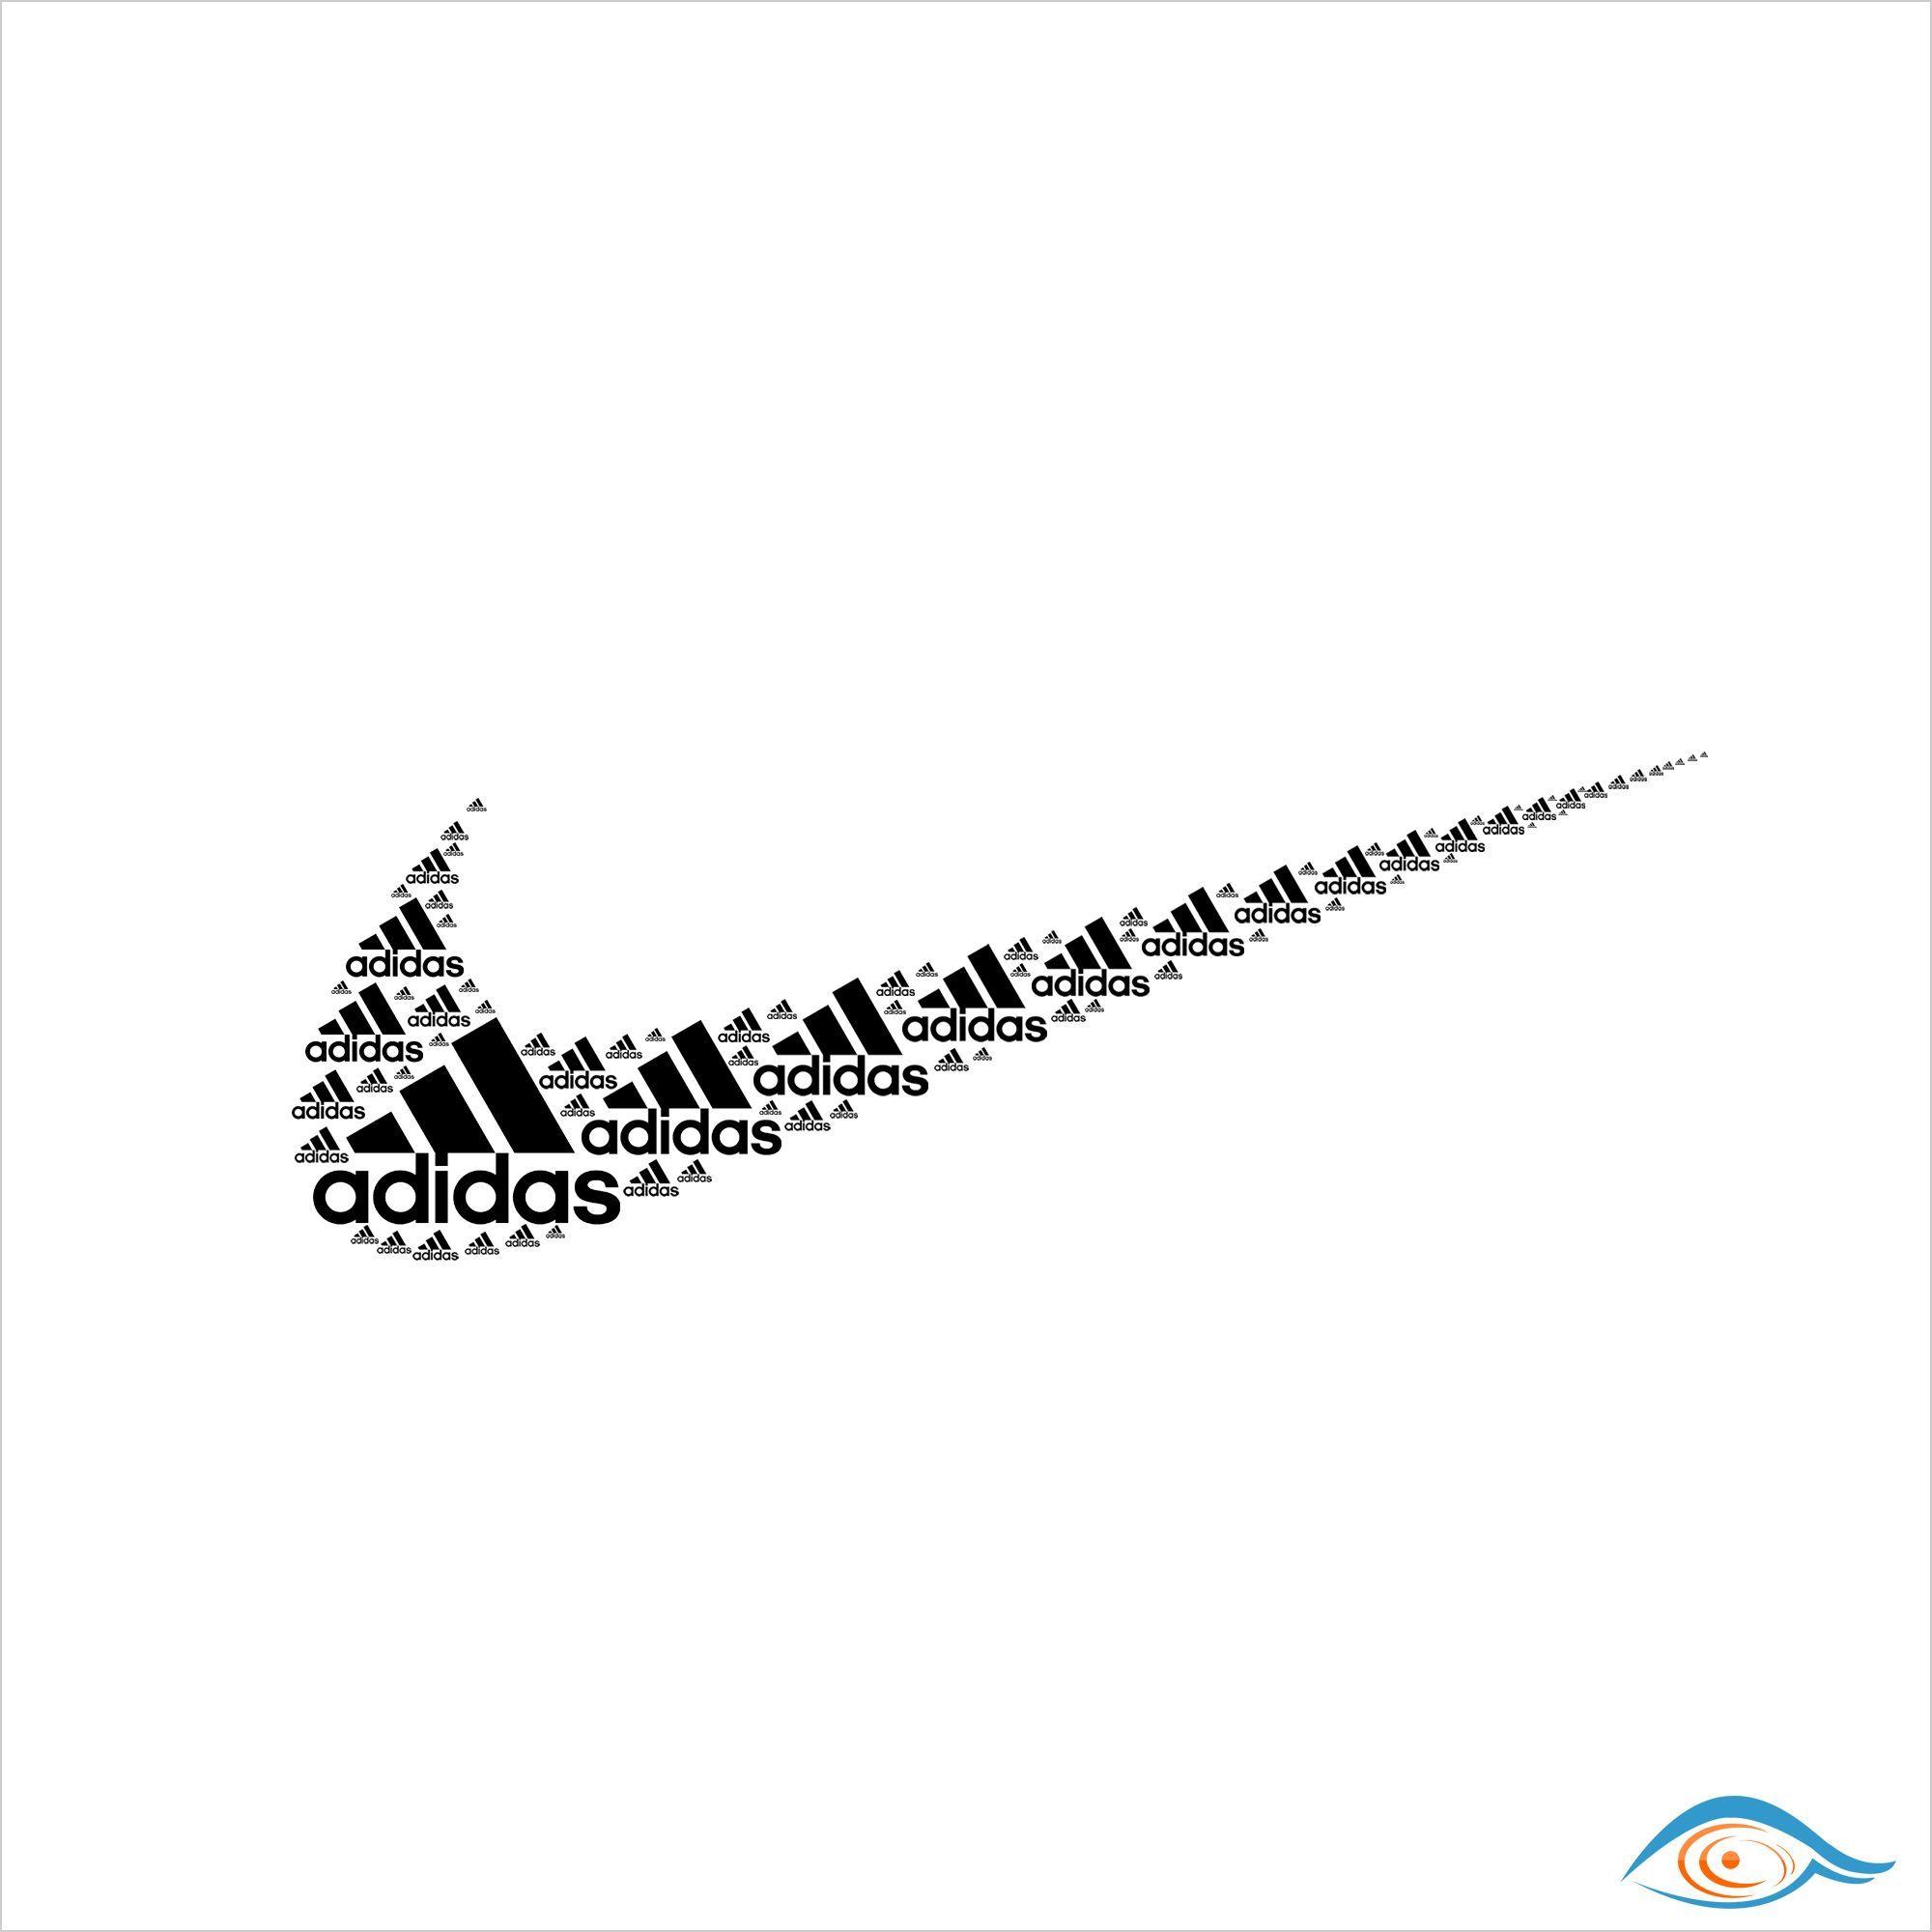 Nike and Adidas Logo - Nike Logo designed with many #adidas logos. C R Y S T A L. Adidas